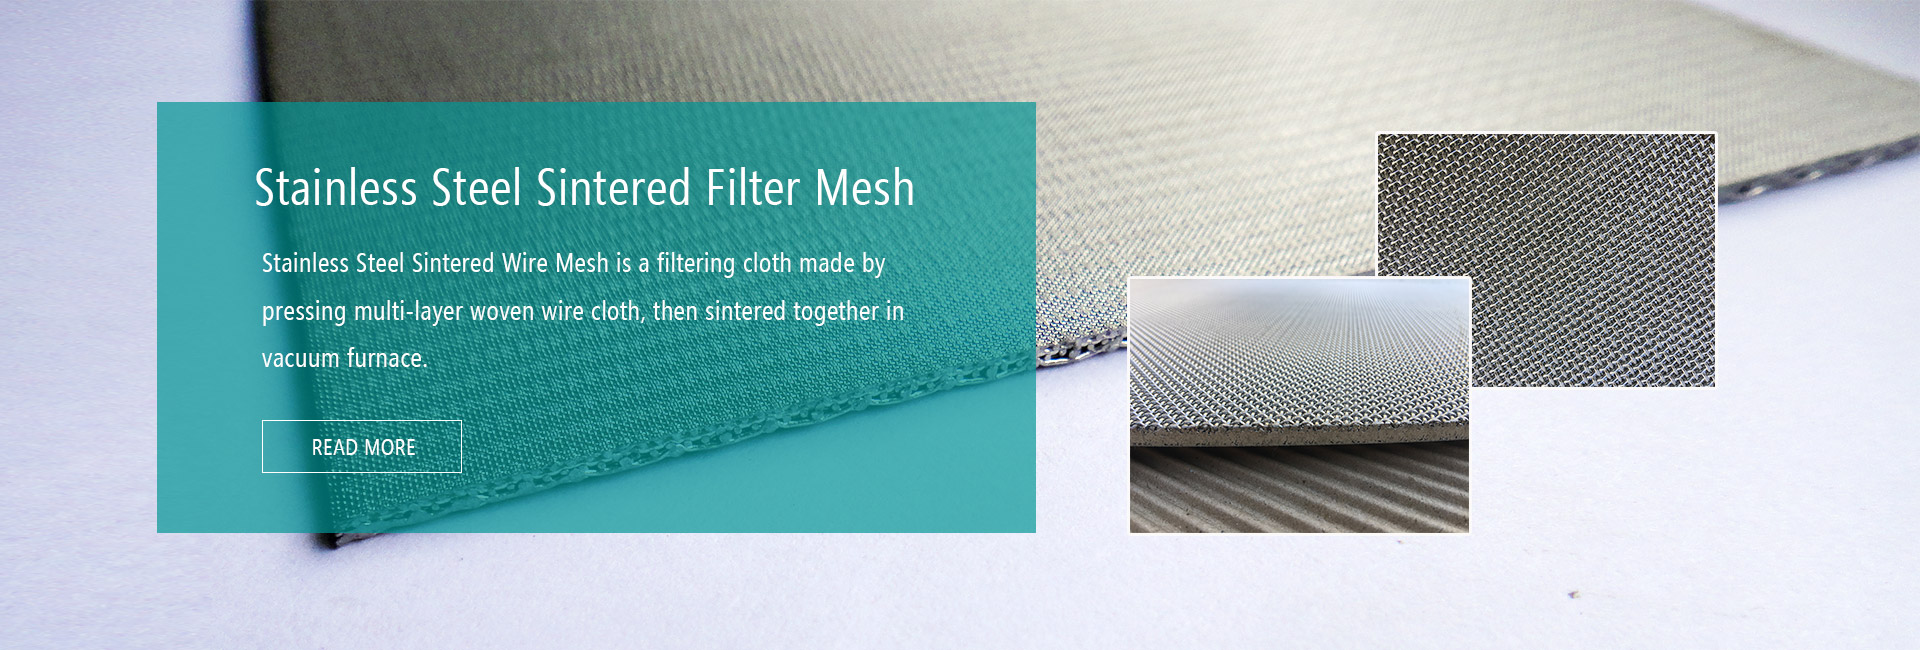 stainless-steel-sintered-filter-mesh